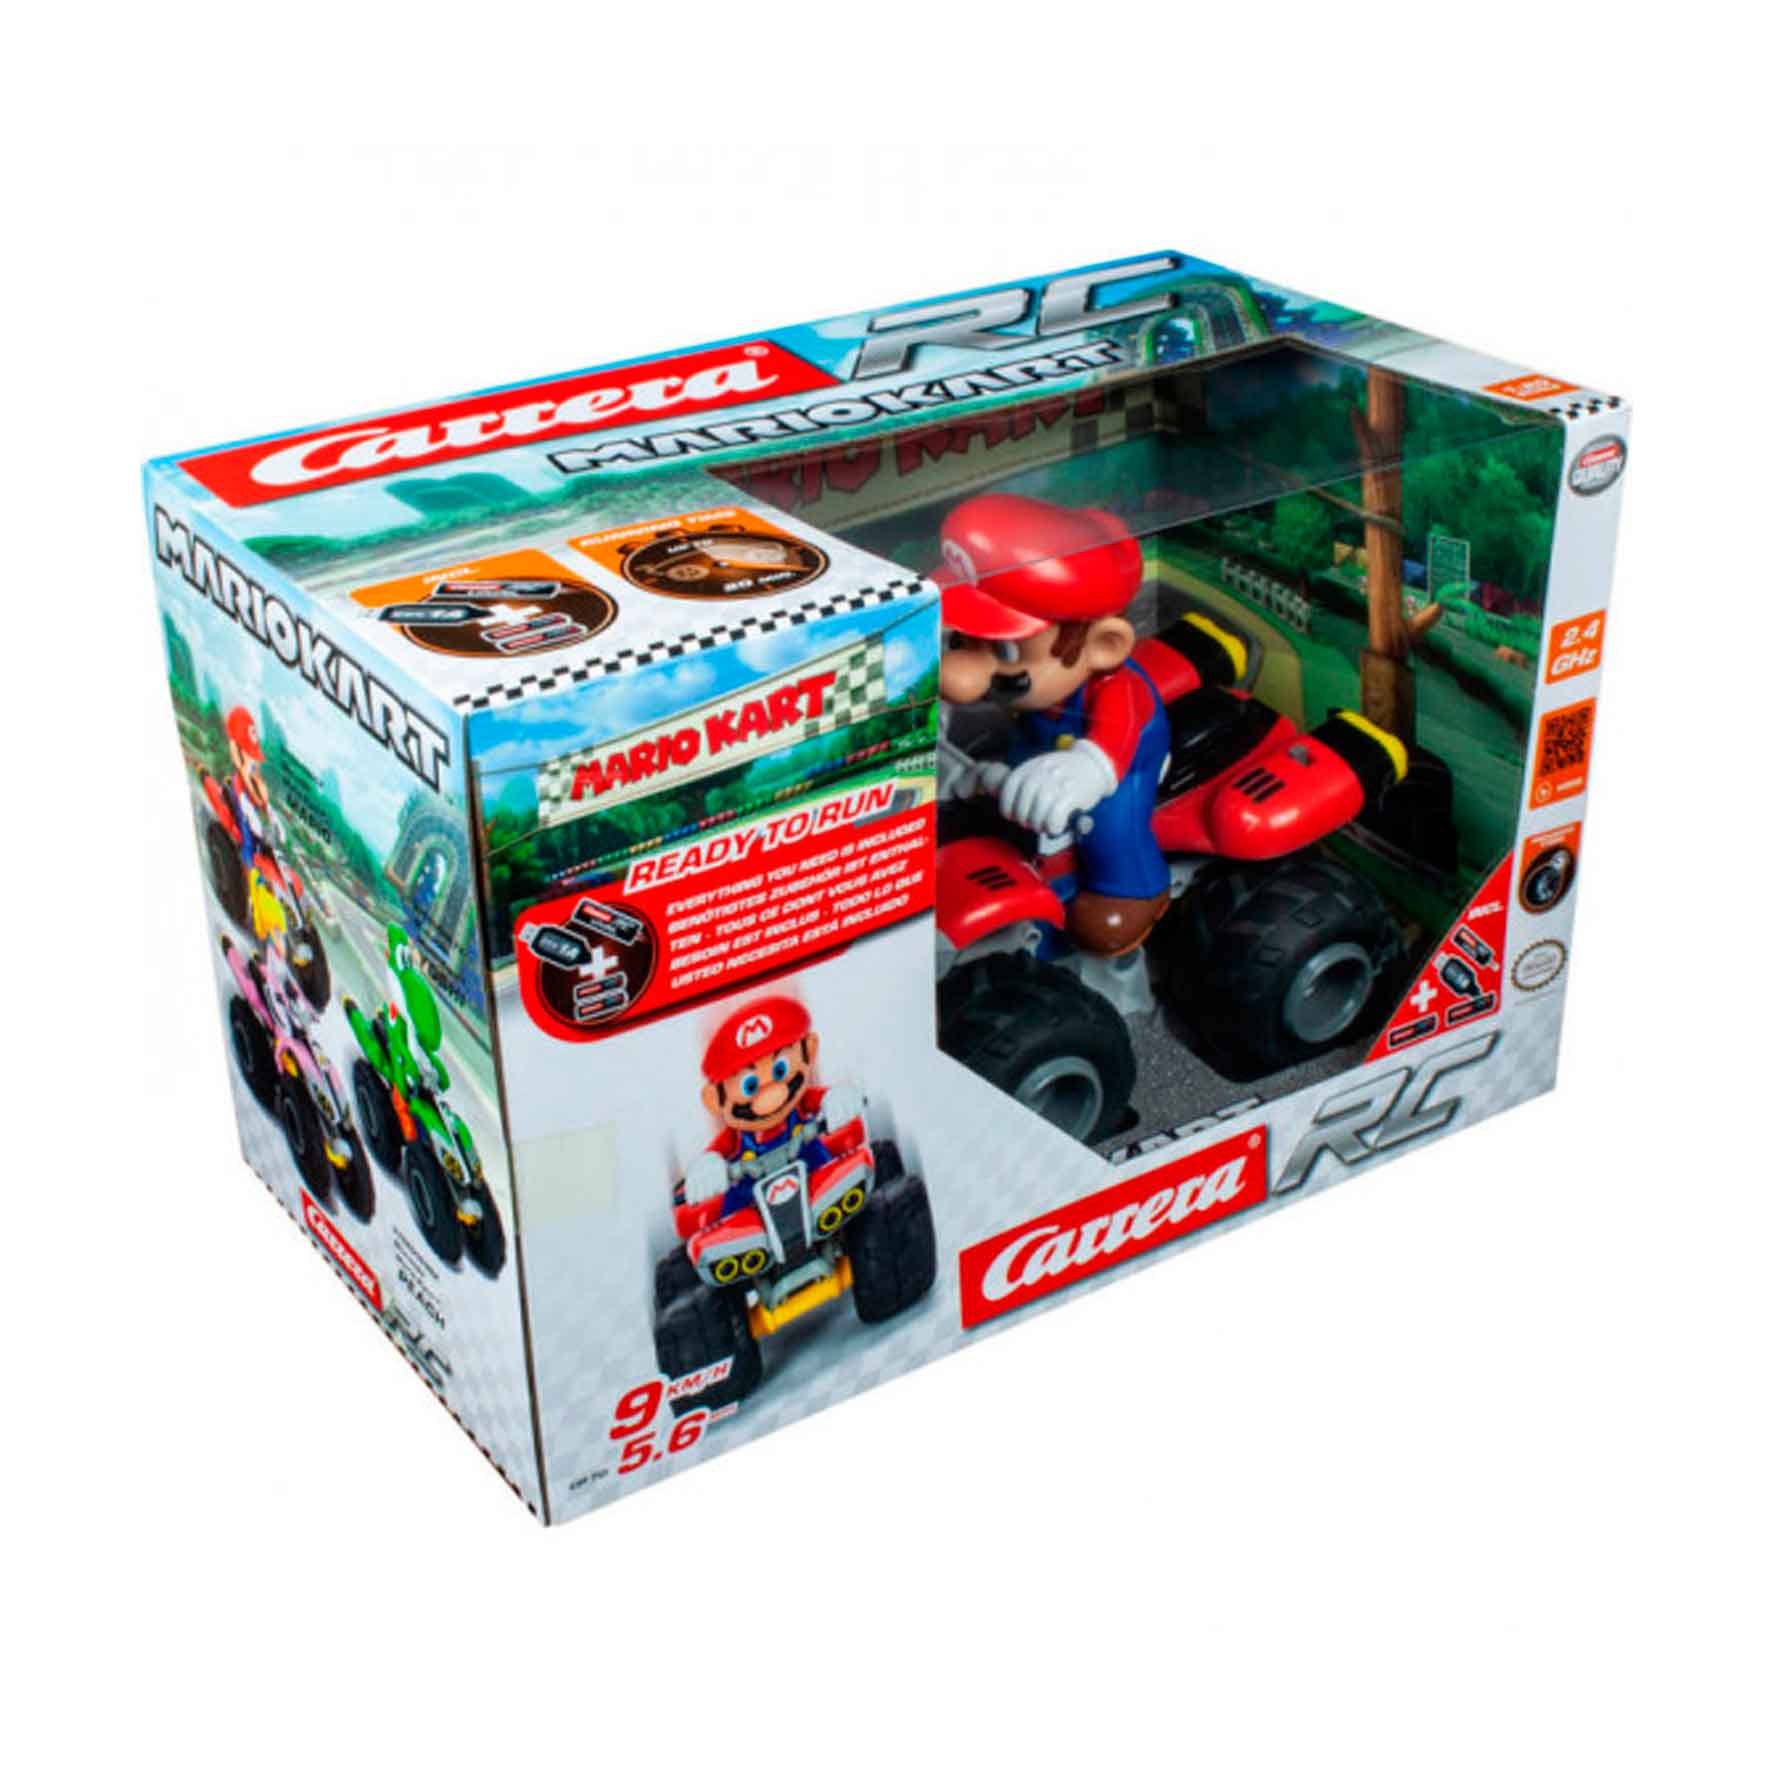 Mario Kart Quad Radio Control 1:20 Bateria y Cargador - Superjuguete Montoro